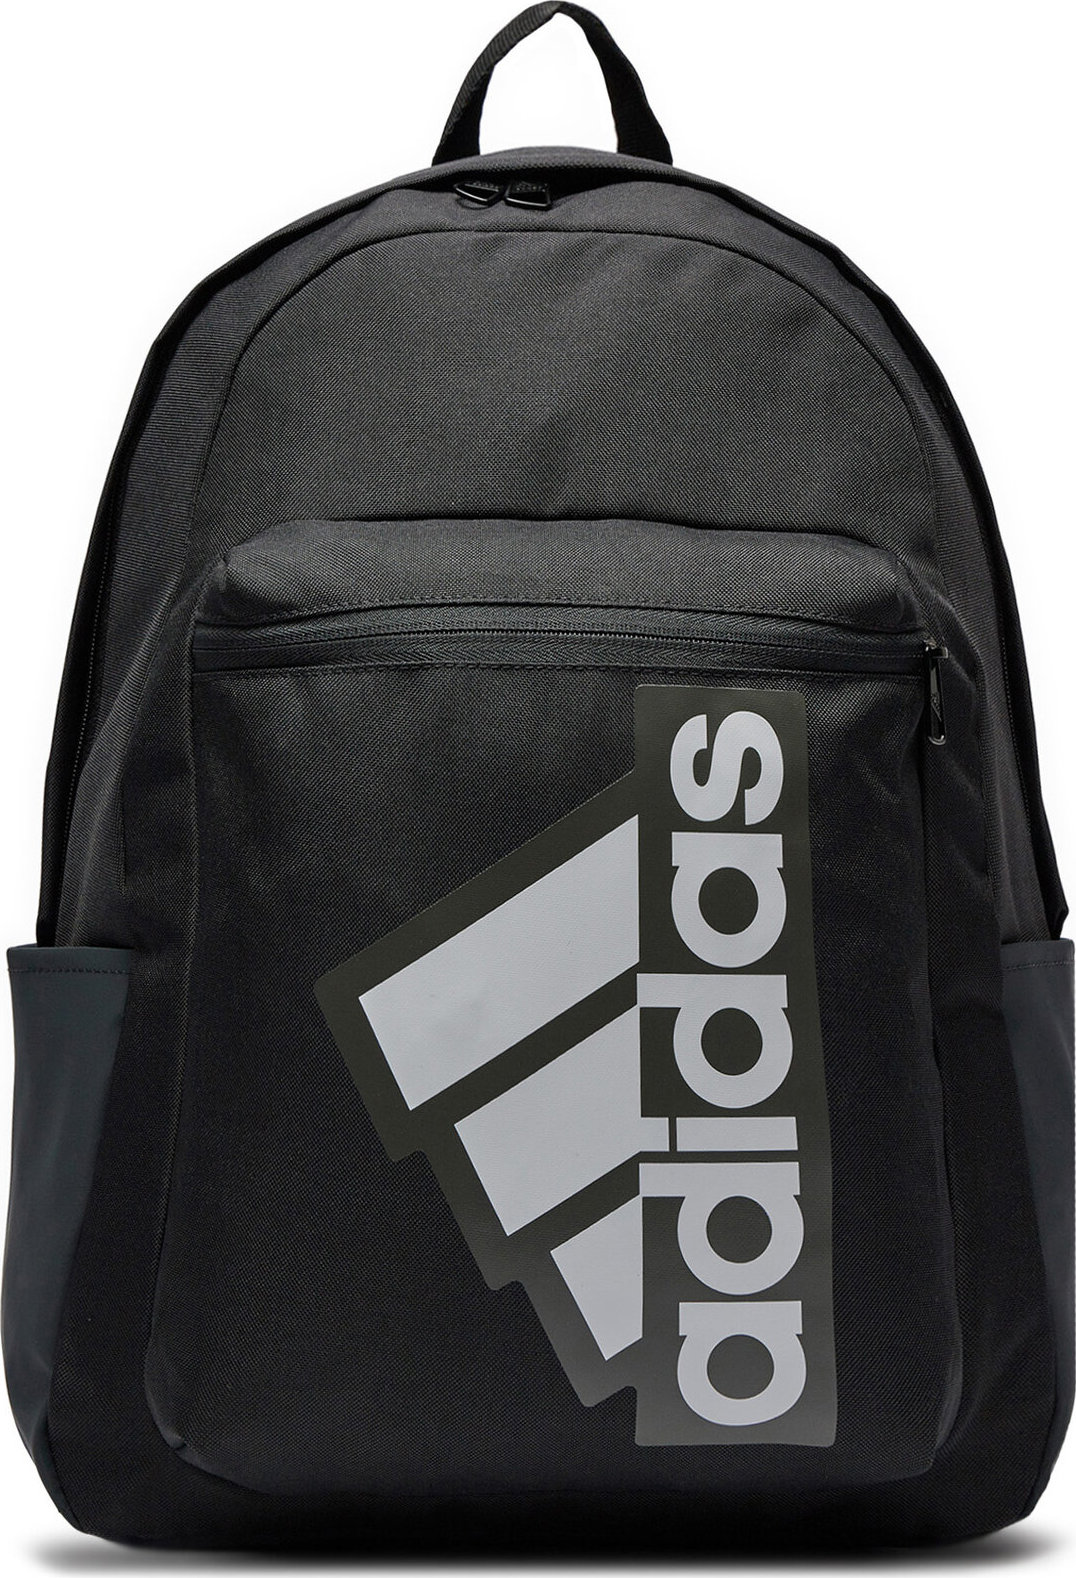 Batoh adidas Backpack IP9887 Carbon/Dshgry/Chacoa